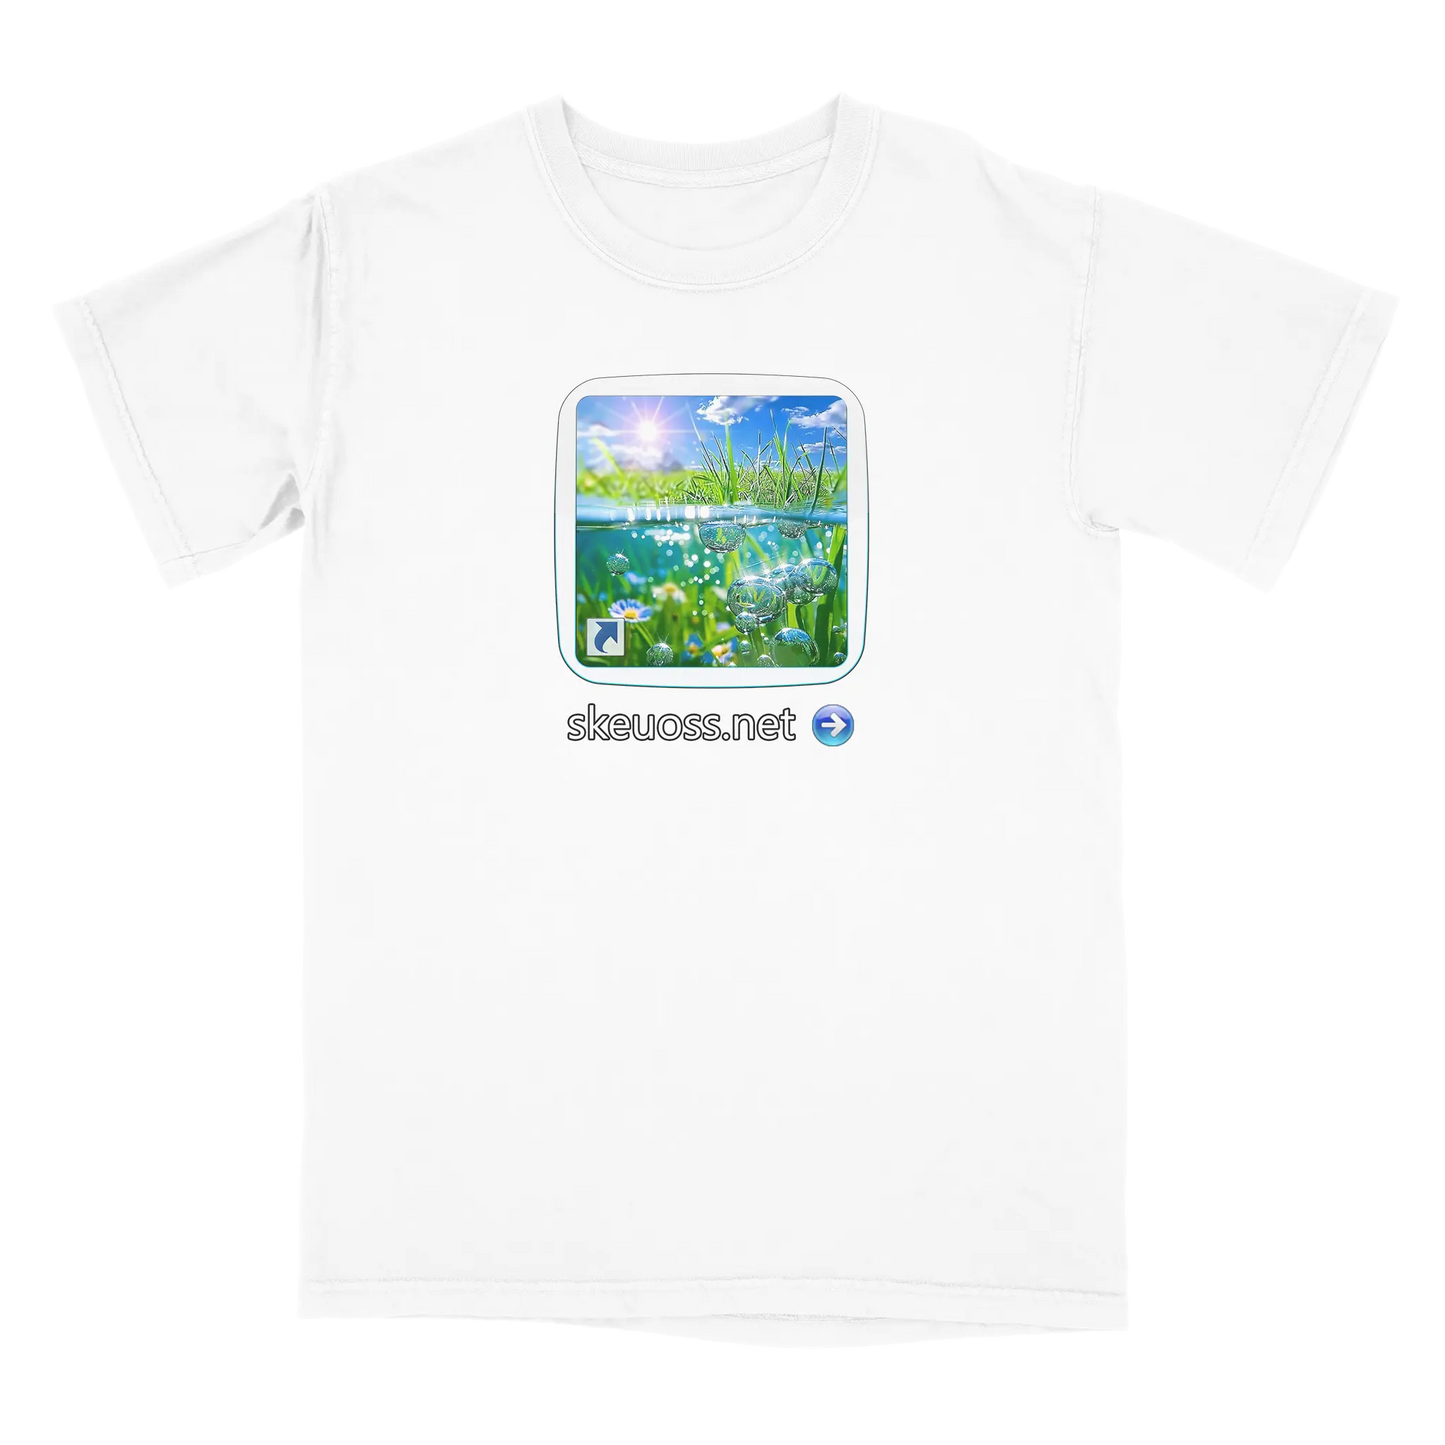 Frutiger Aero T-shirt - User Login Collection - User 256